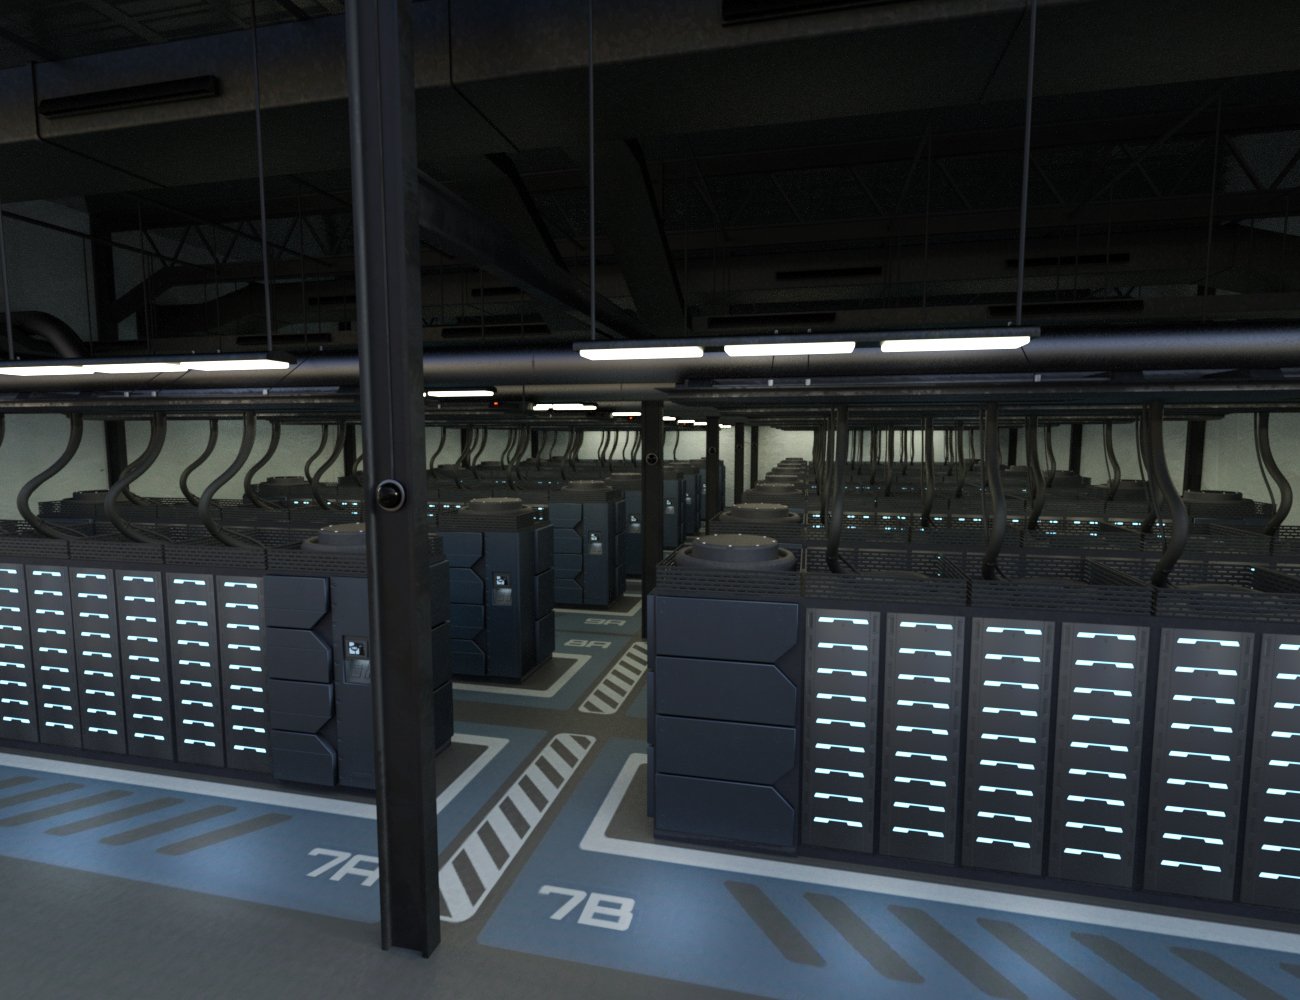 Server Farm by: The AntFarm, 3D Models by Daz 3D